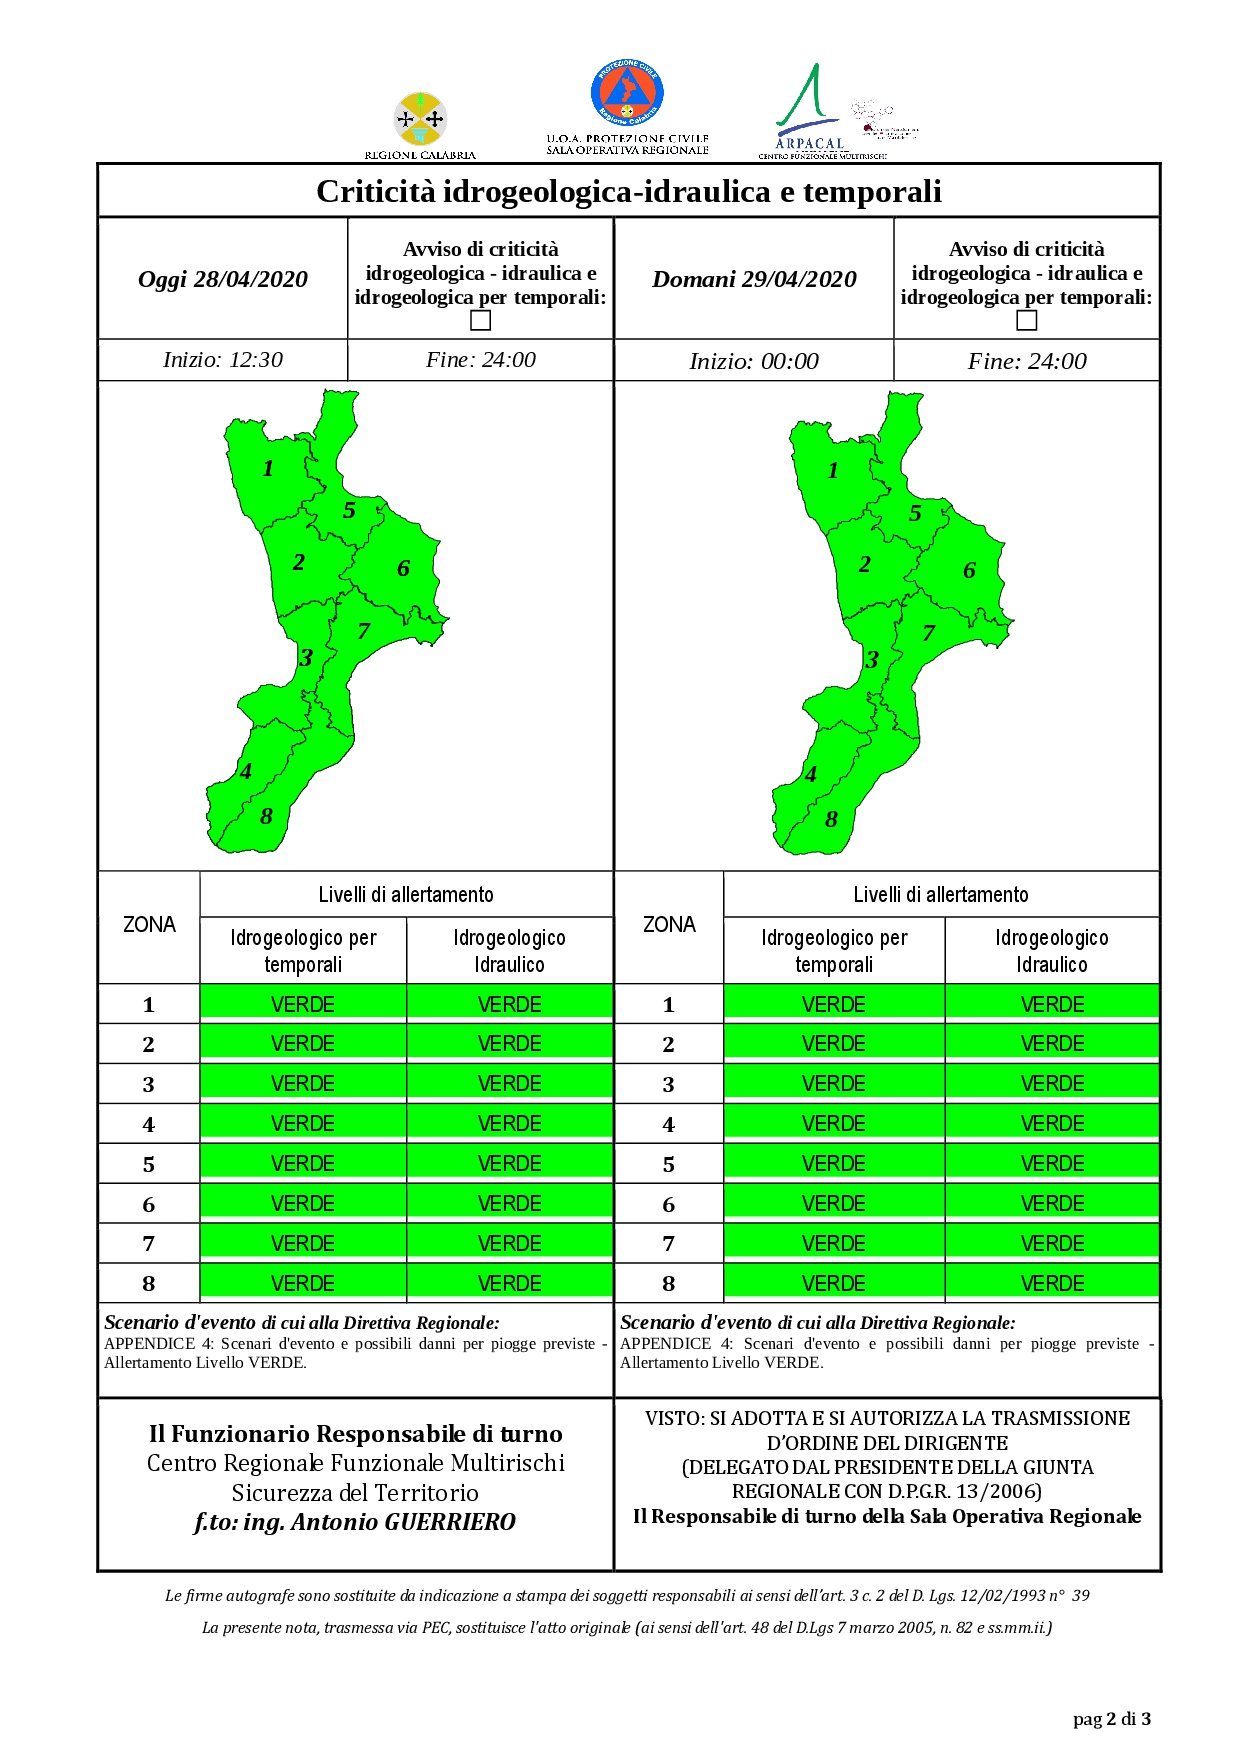 Criticità idrogeologica-idraulica e temporali in Calabria 28-04-2020